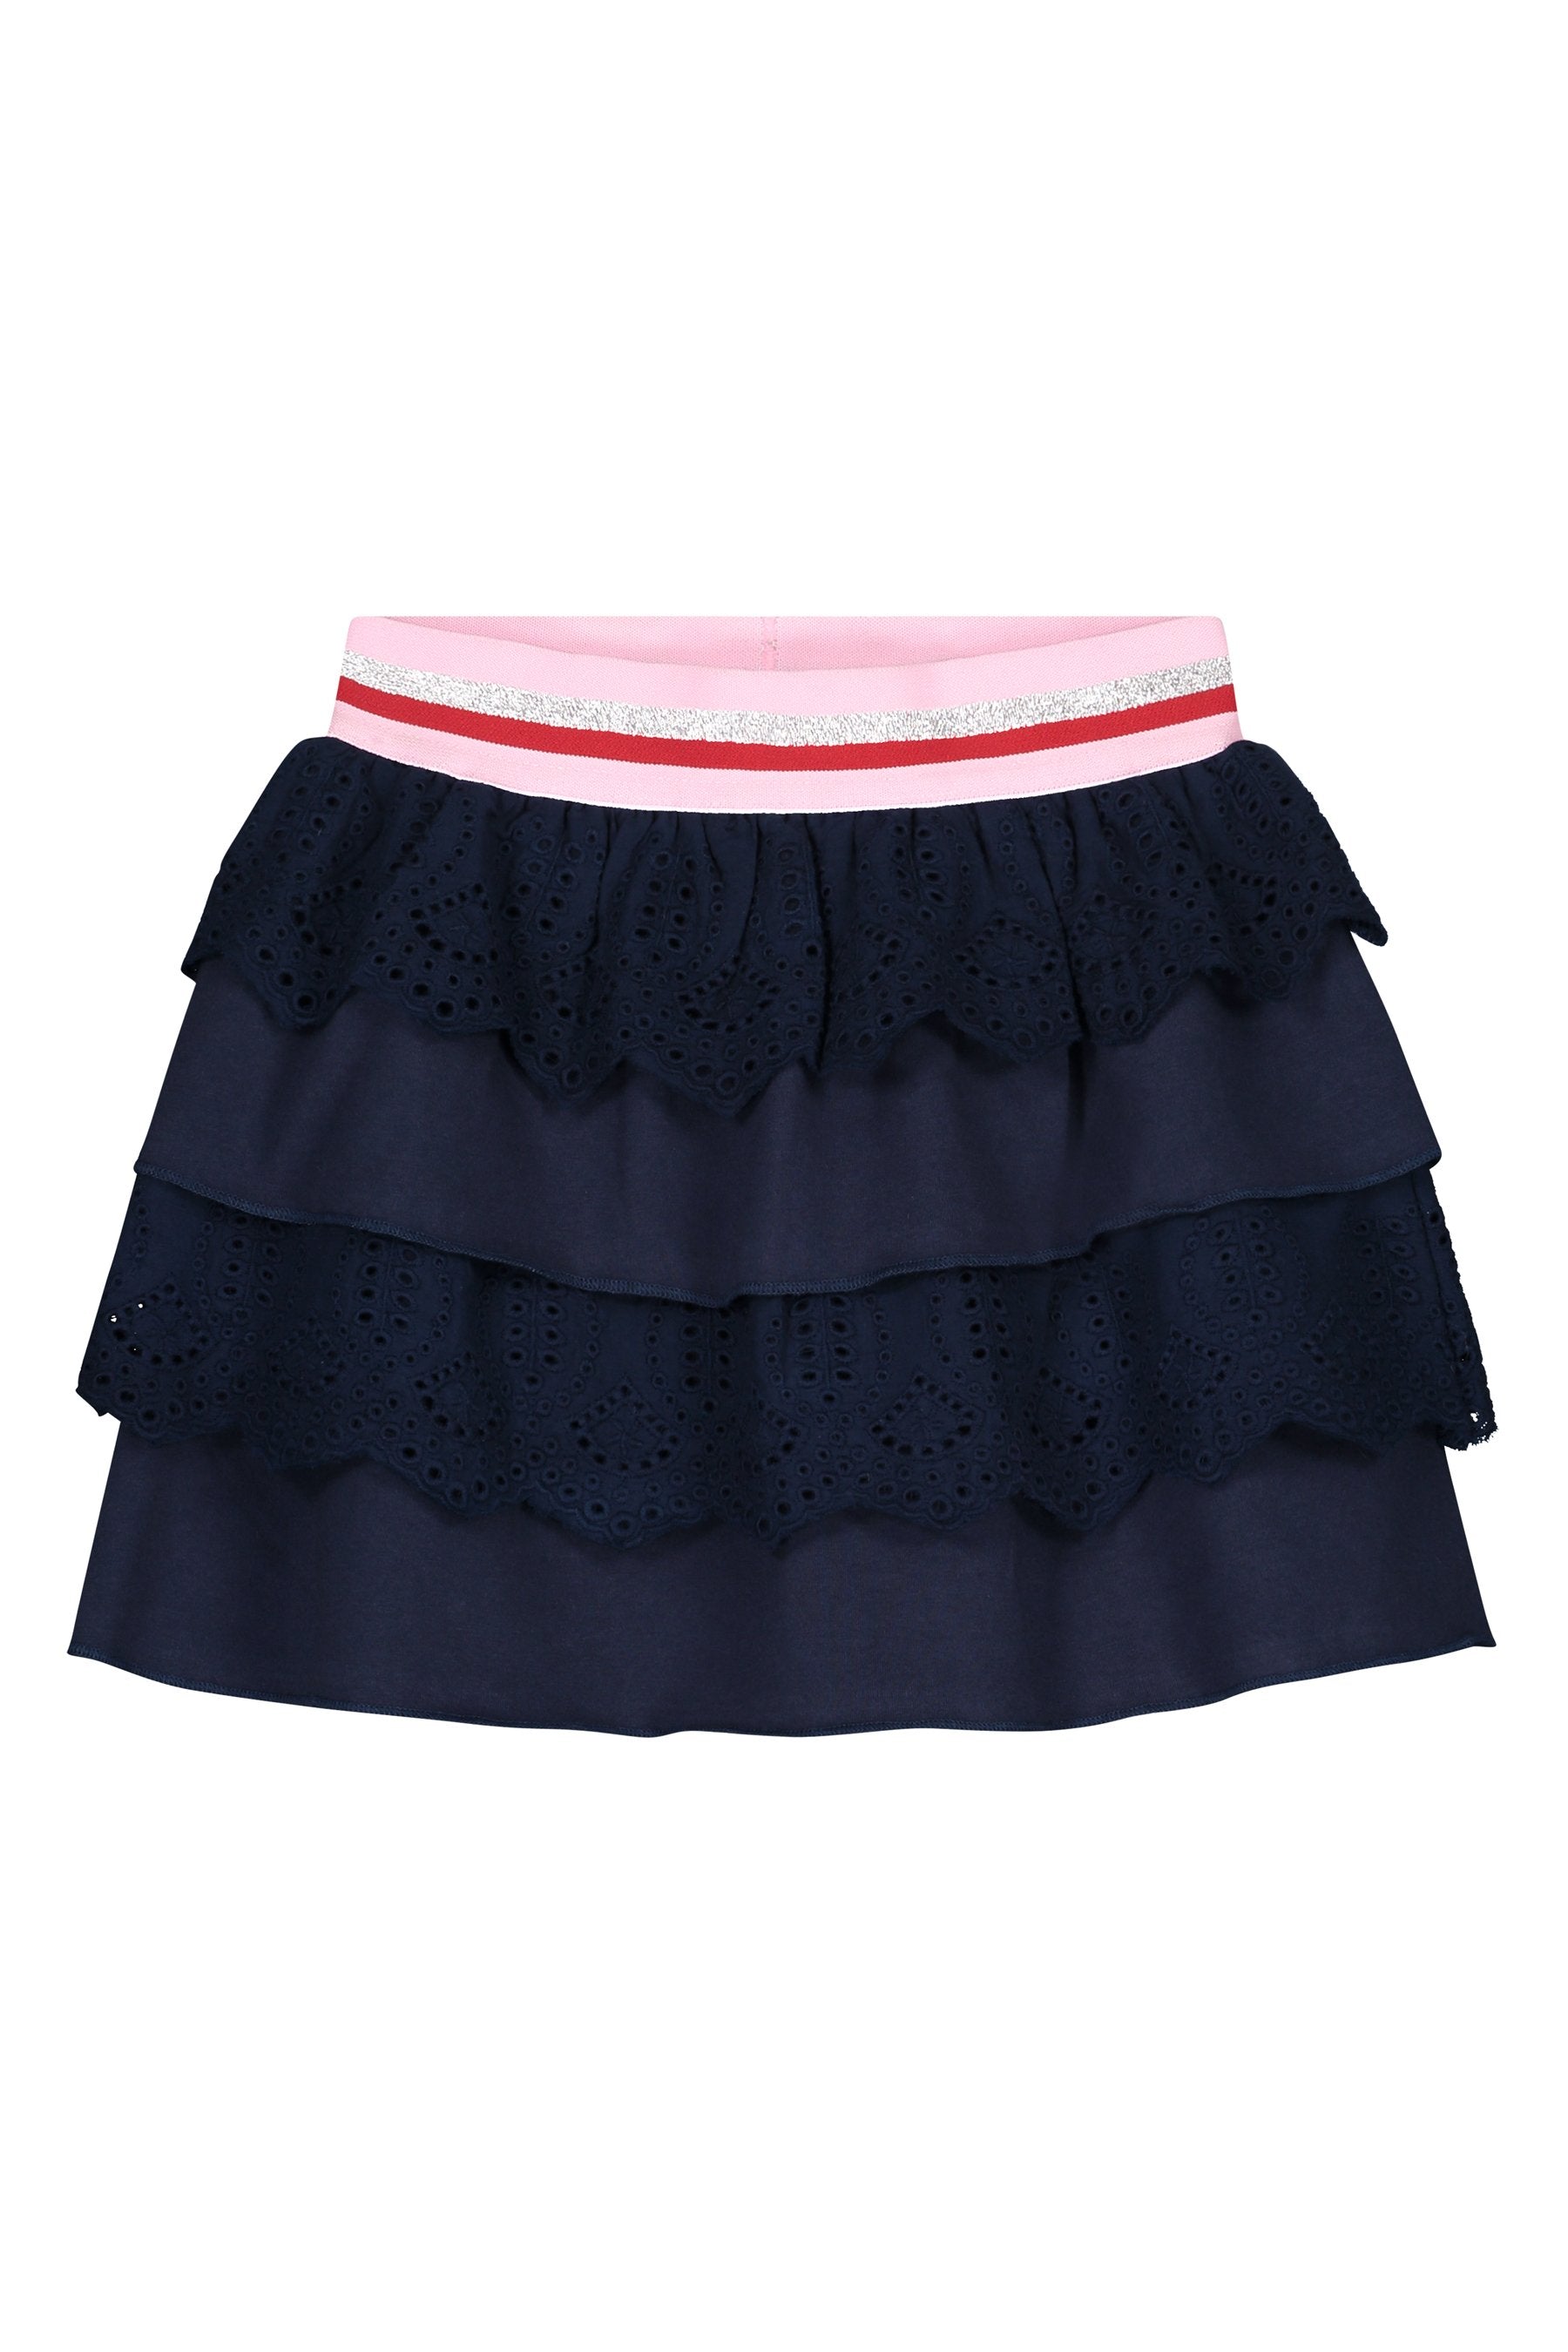 Quapi skirt Arina S202